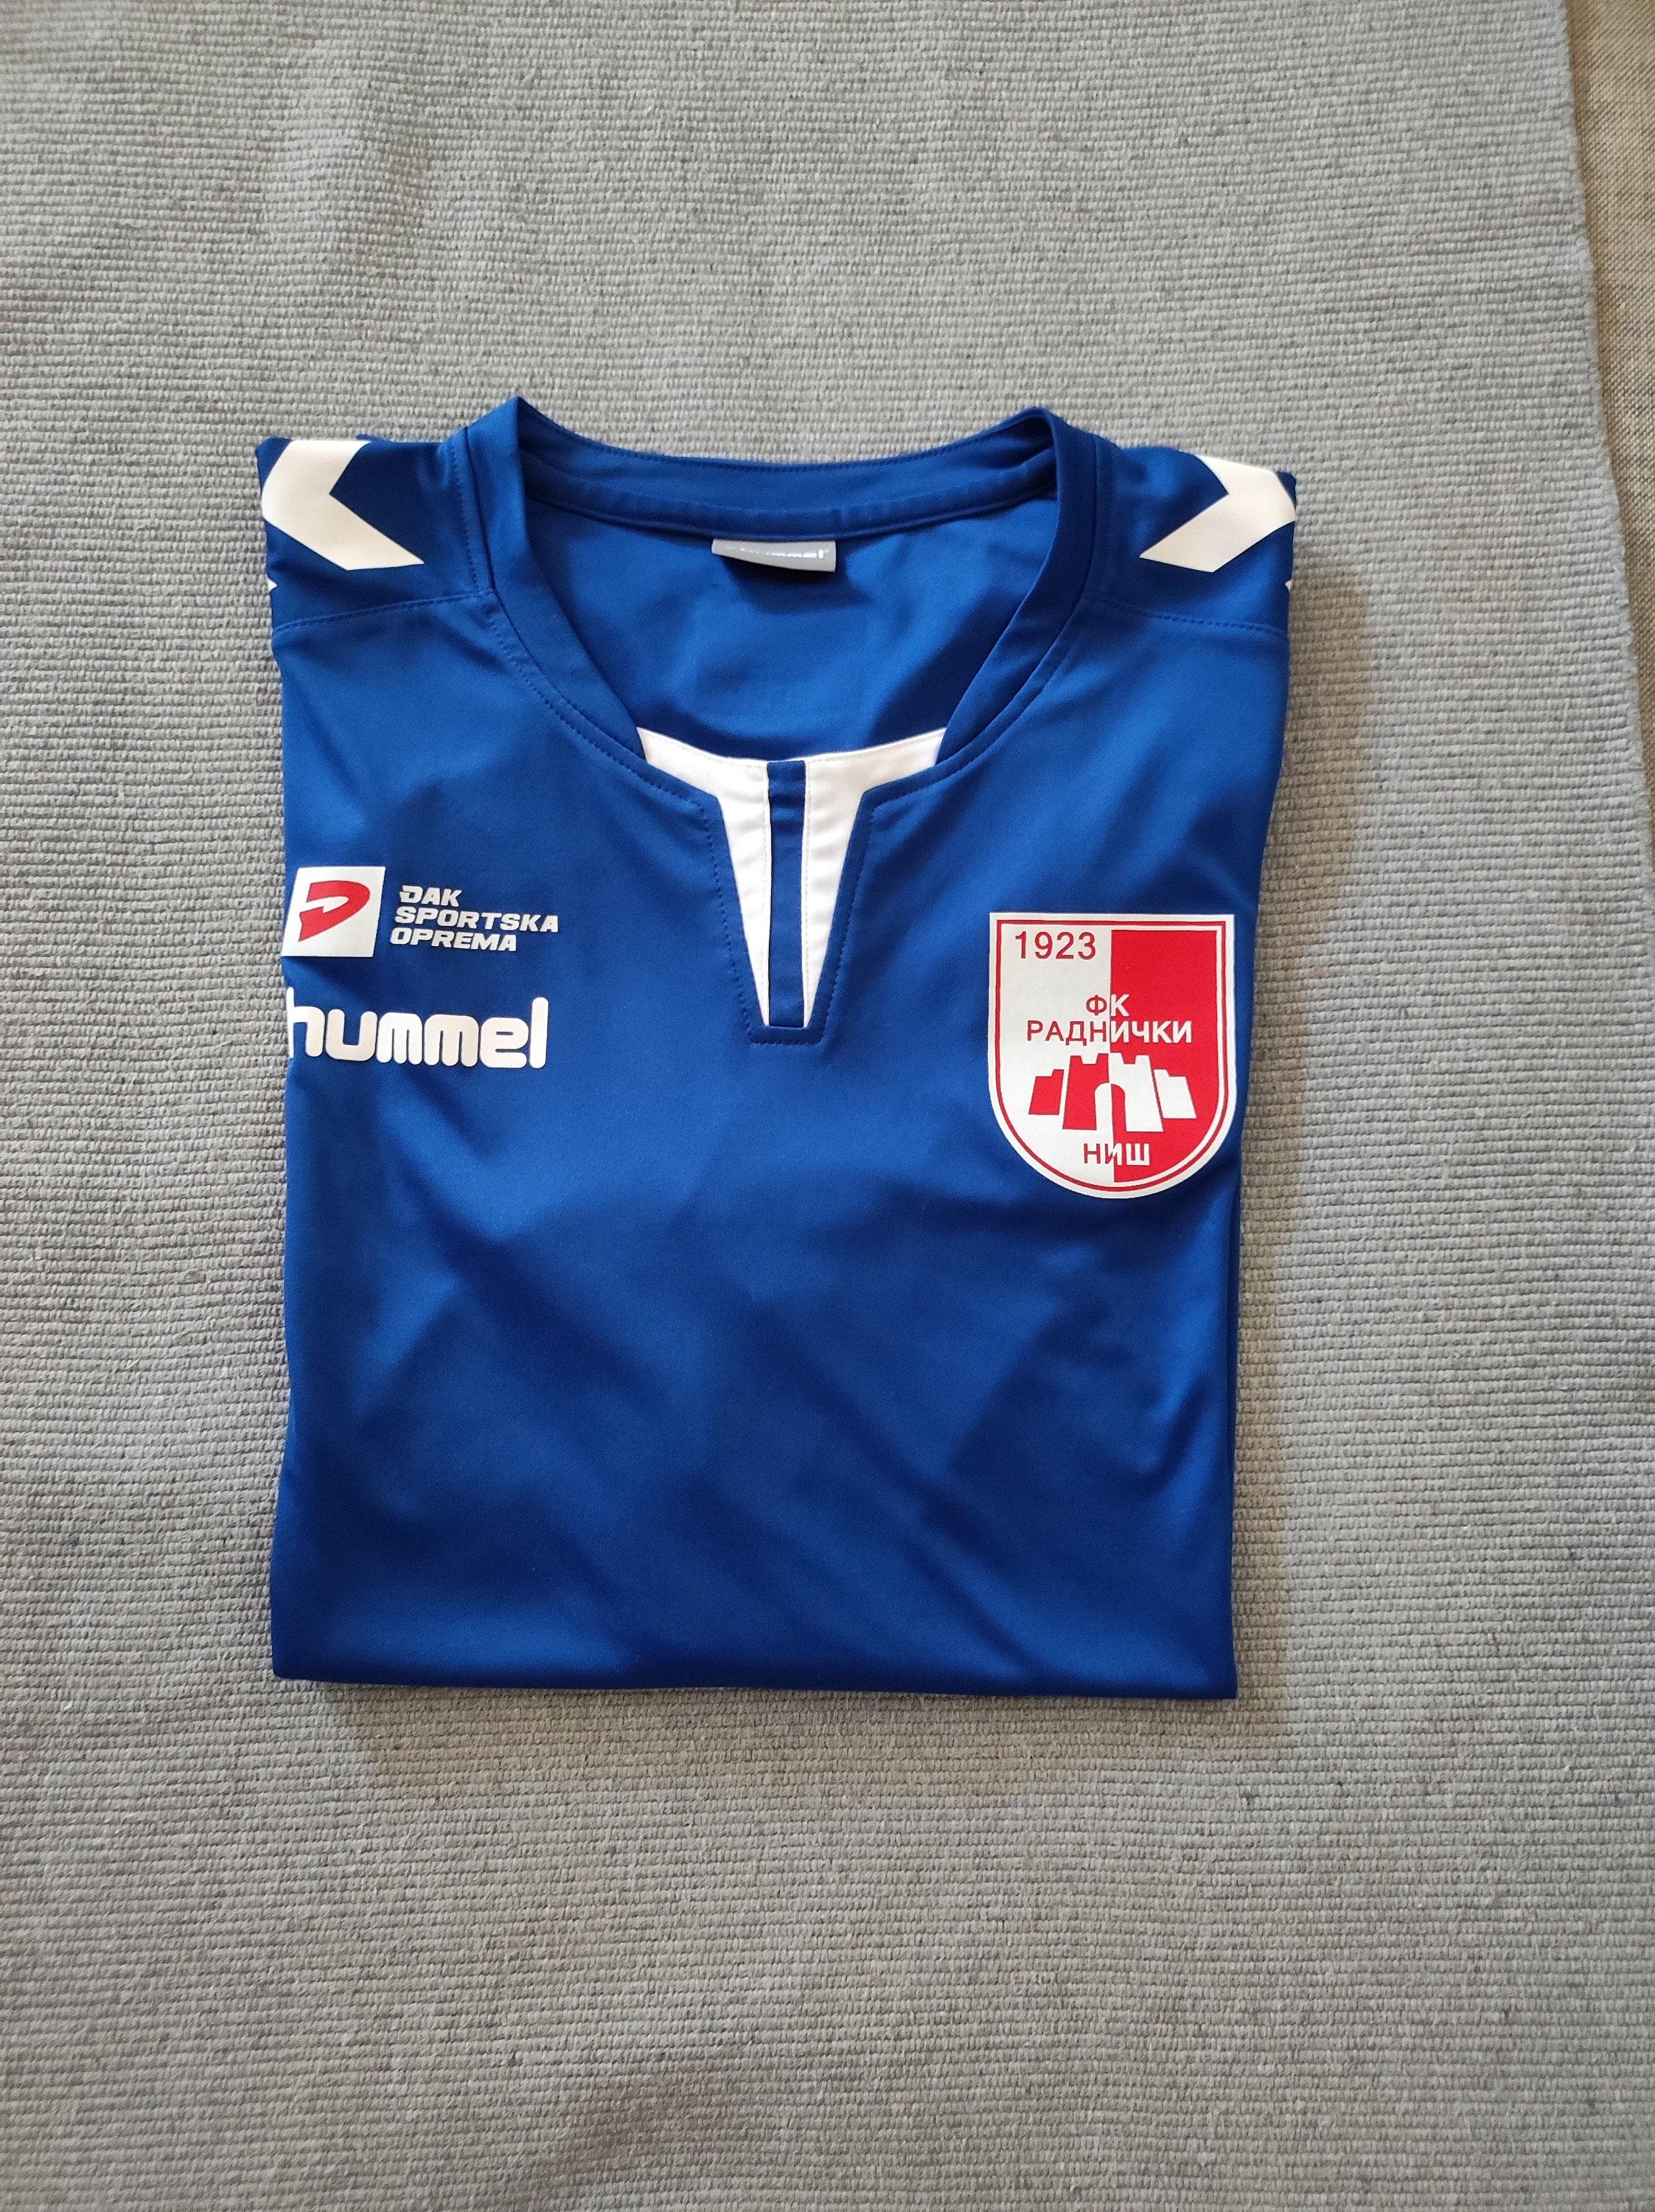 Old FK Radnički 1923 football shirts and soccer jerseys